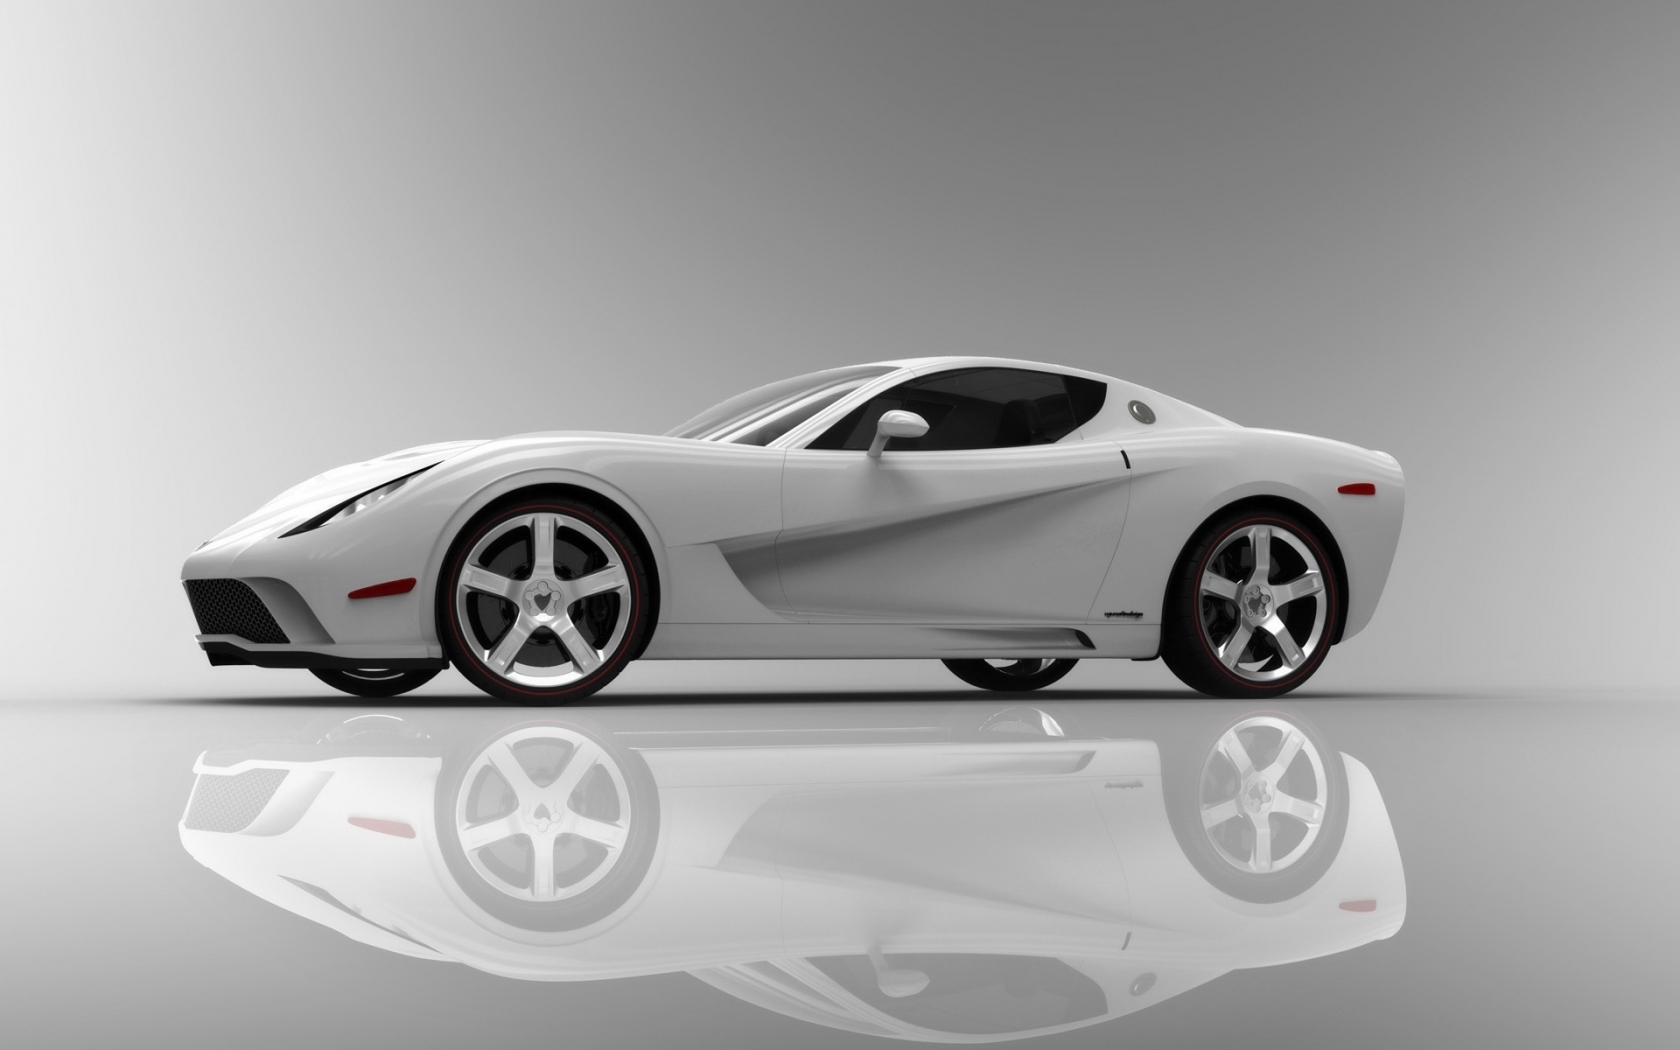 Corvette Z03 2009 White Side Angle for 1680 x 1050 widescreen resolution